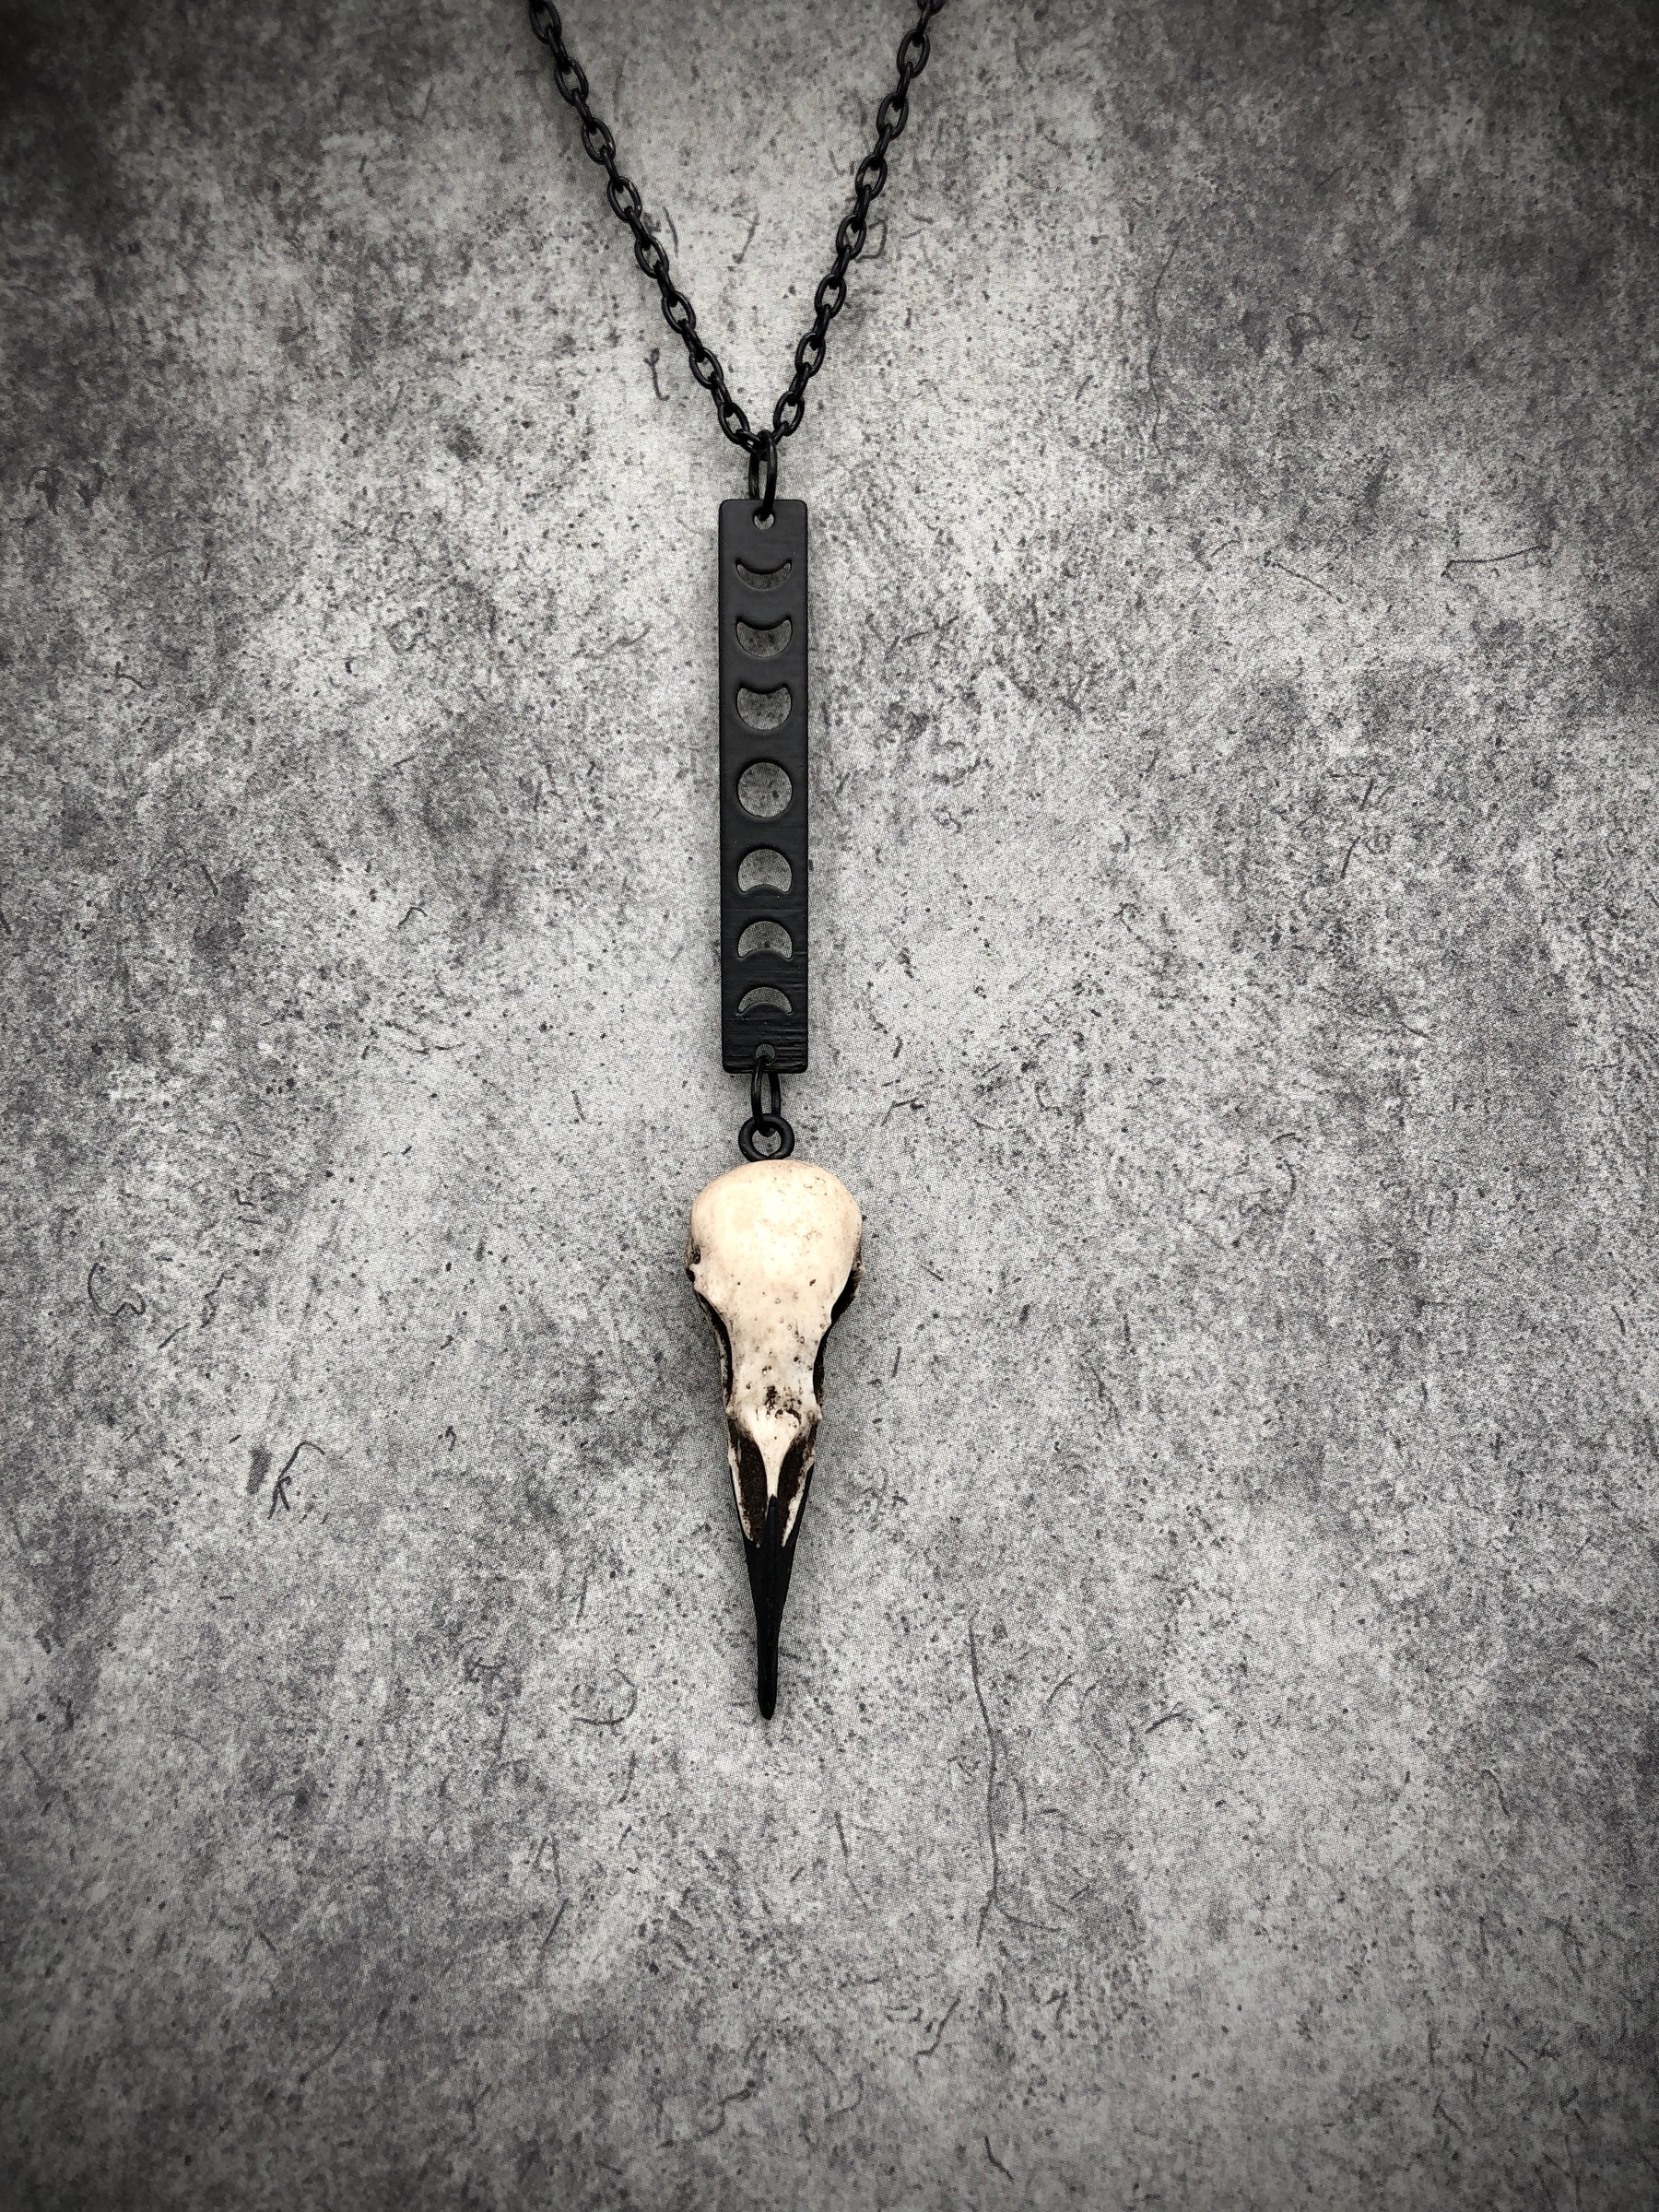 Phases of the Moon vertical bar charm pendant and bone jewelry mini resin raven bird skull dangle pendant.